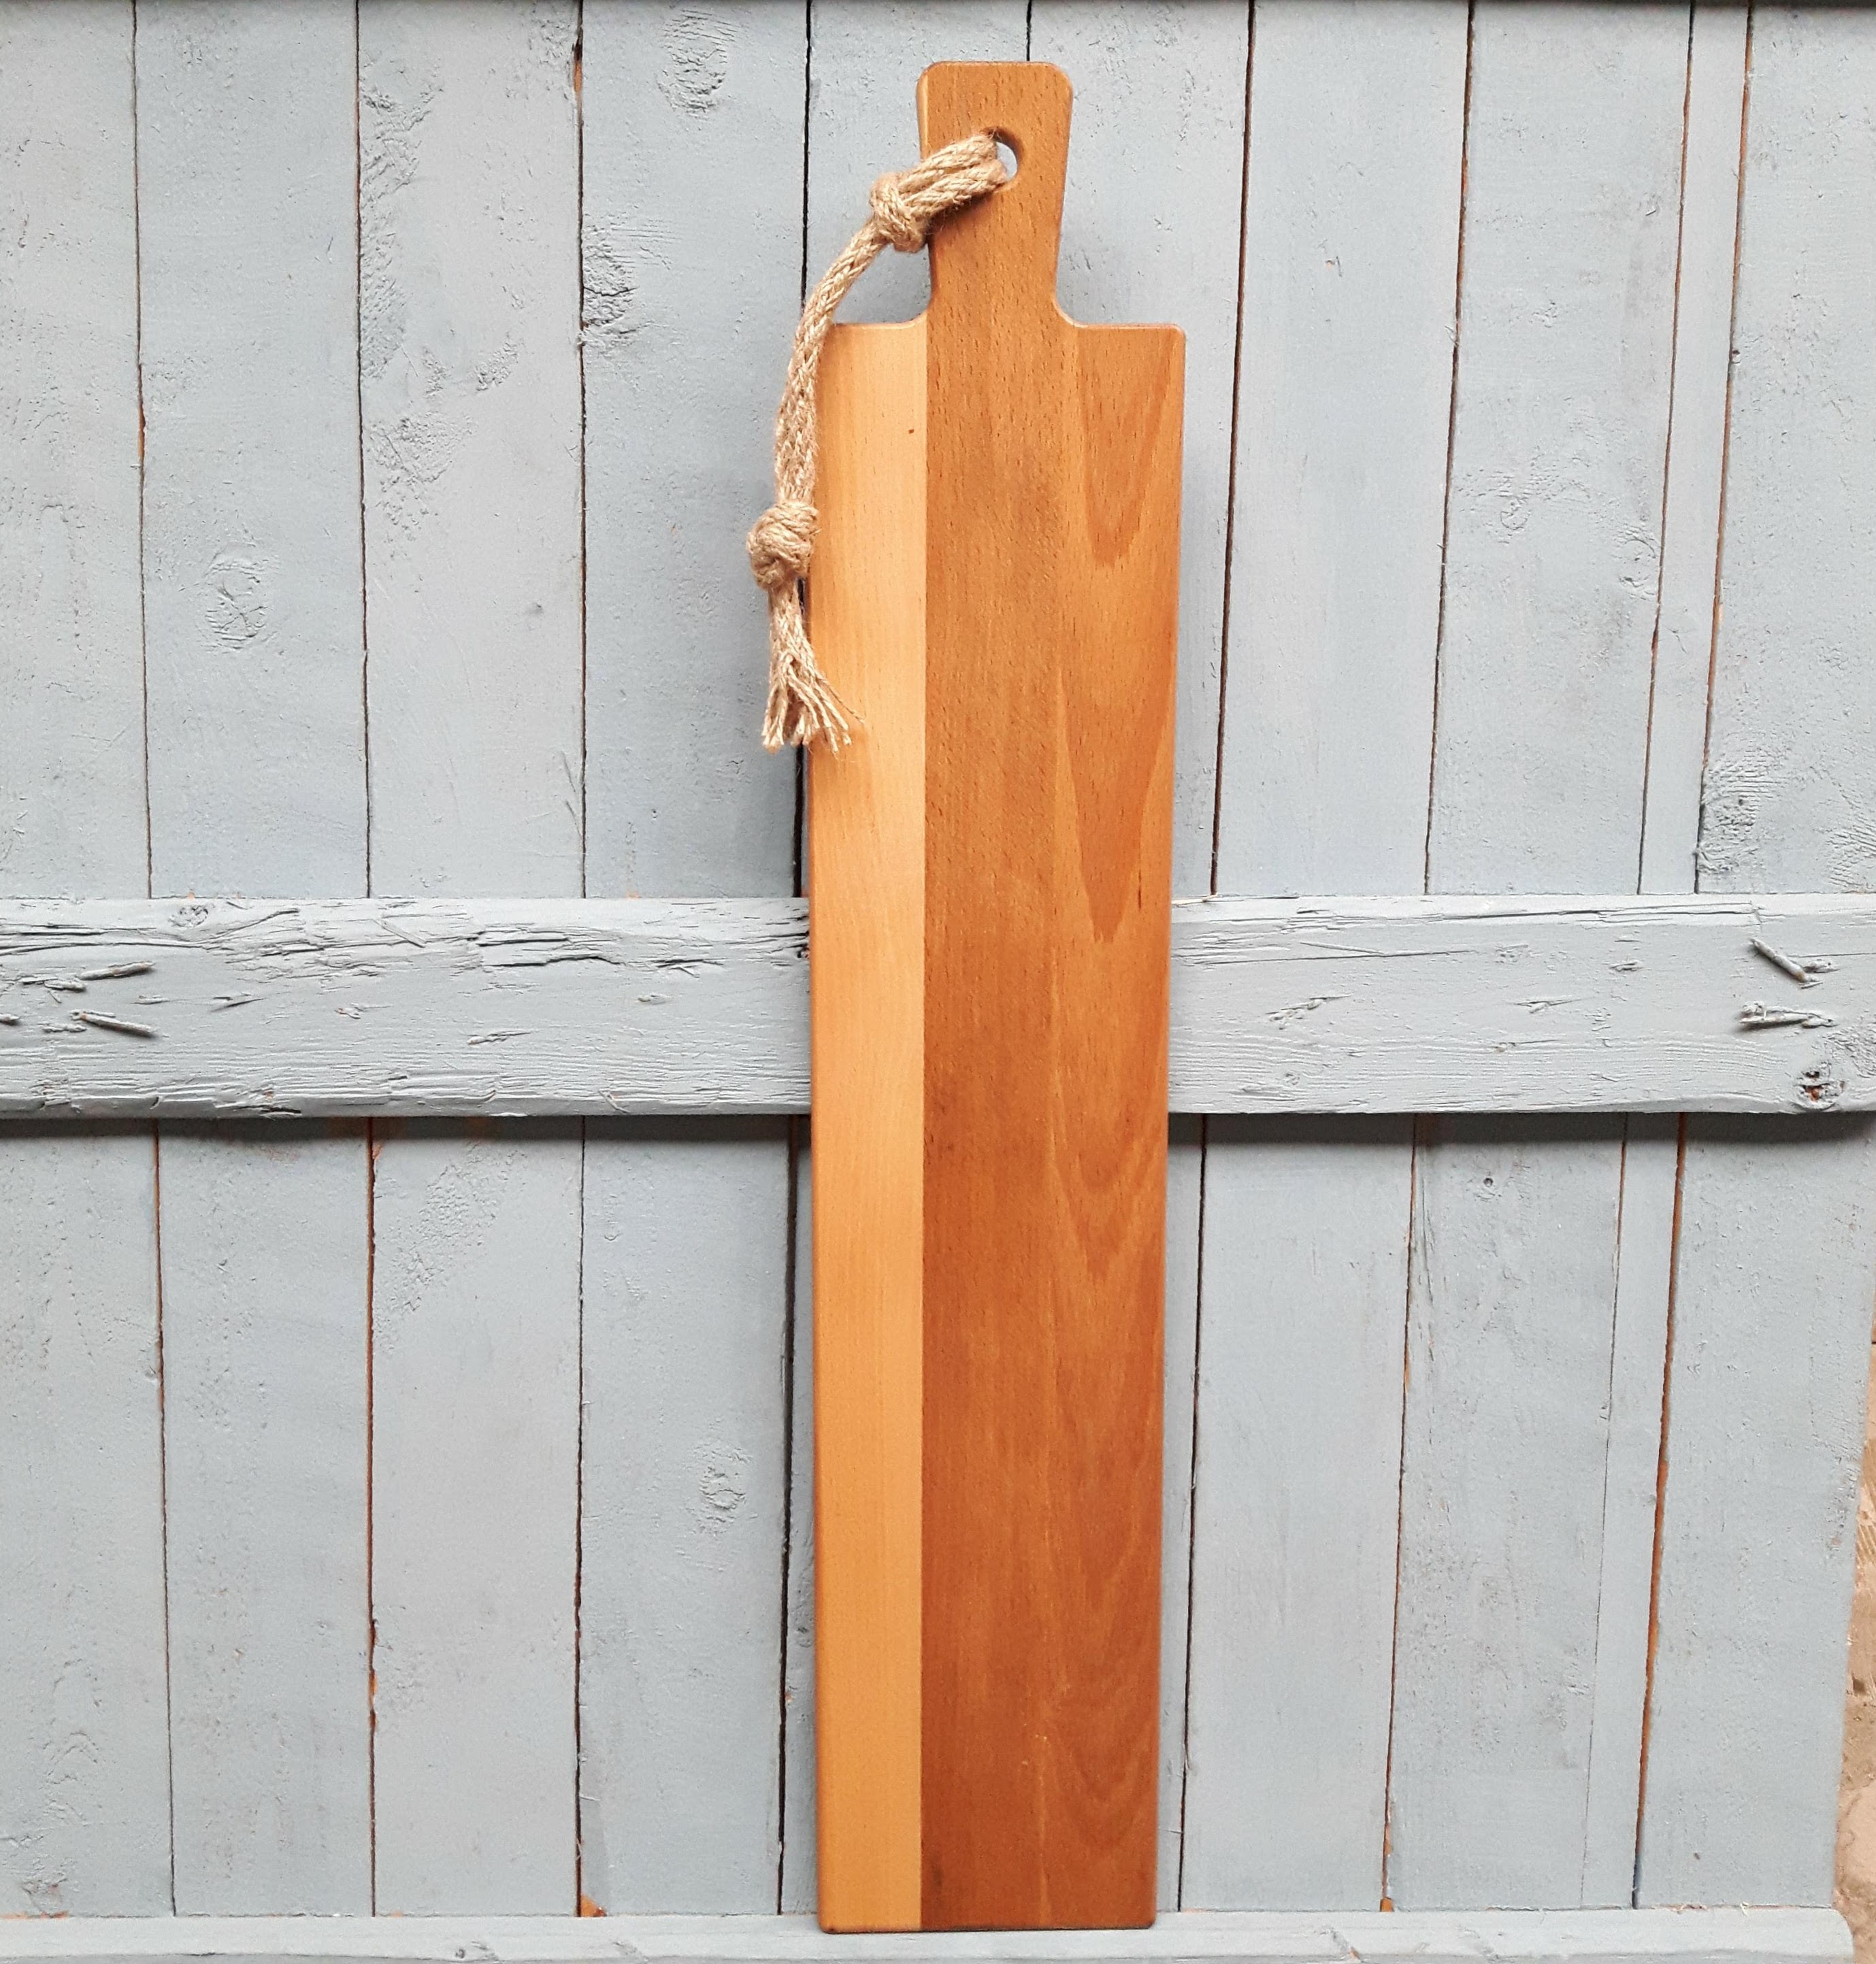 Ontspannend Scorch tarwe Lange beuken snijplank 69x13 cm incl gravure - Stempelfun- Stempels maken  en graveren